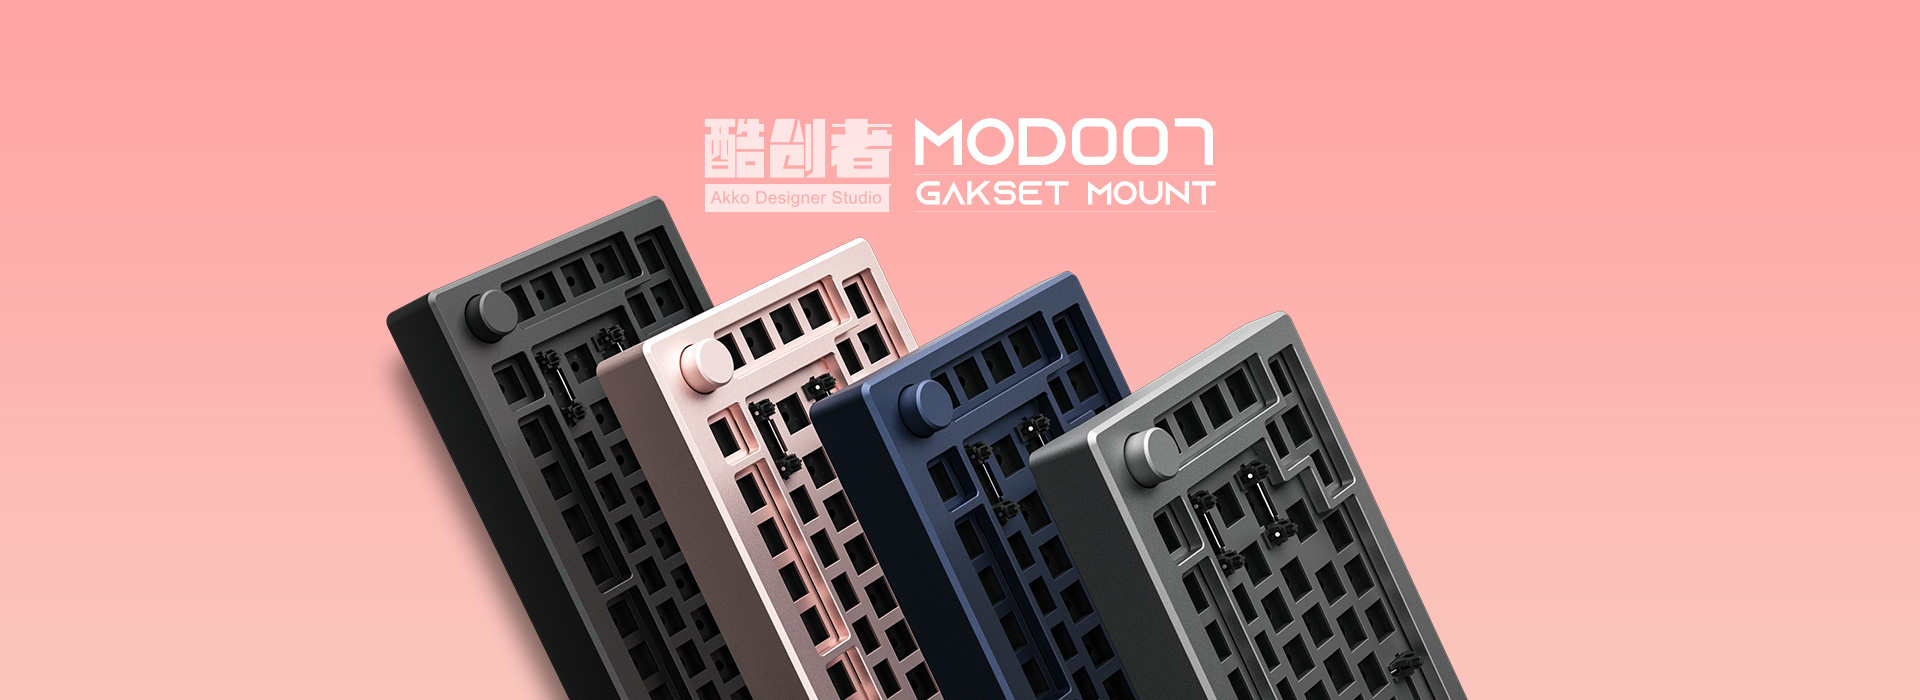 kit-ban-phim-co-akko-designer-studio-mod007-banner